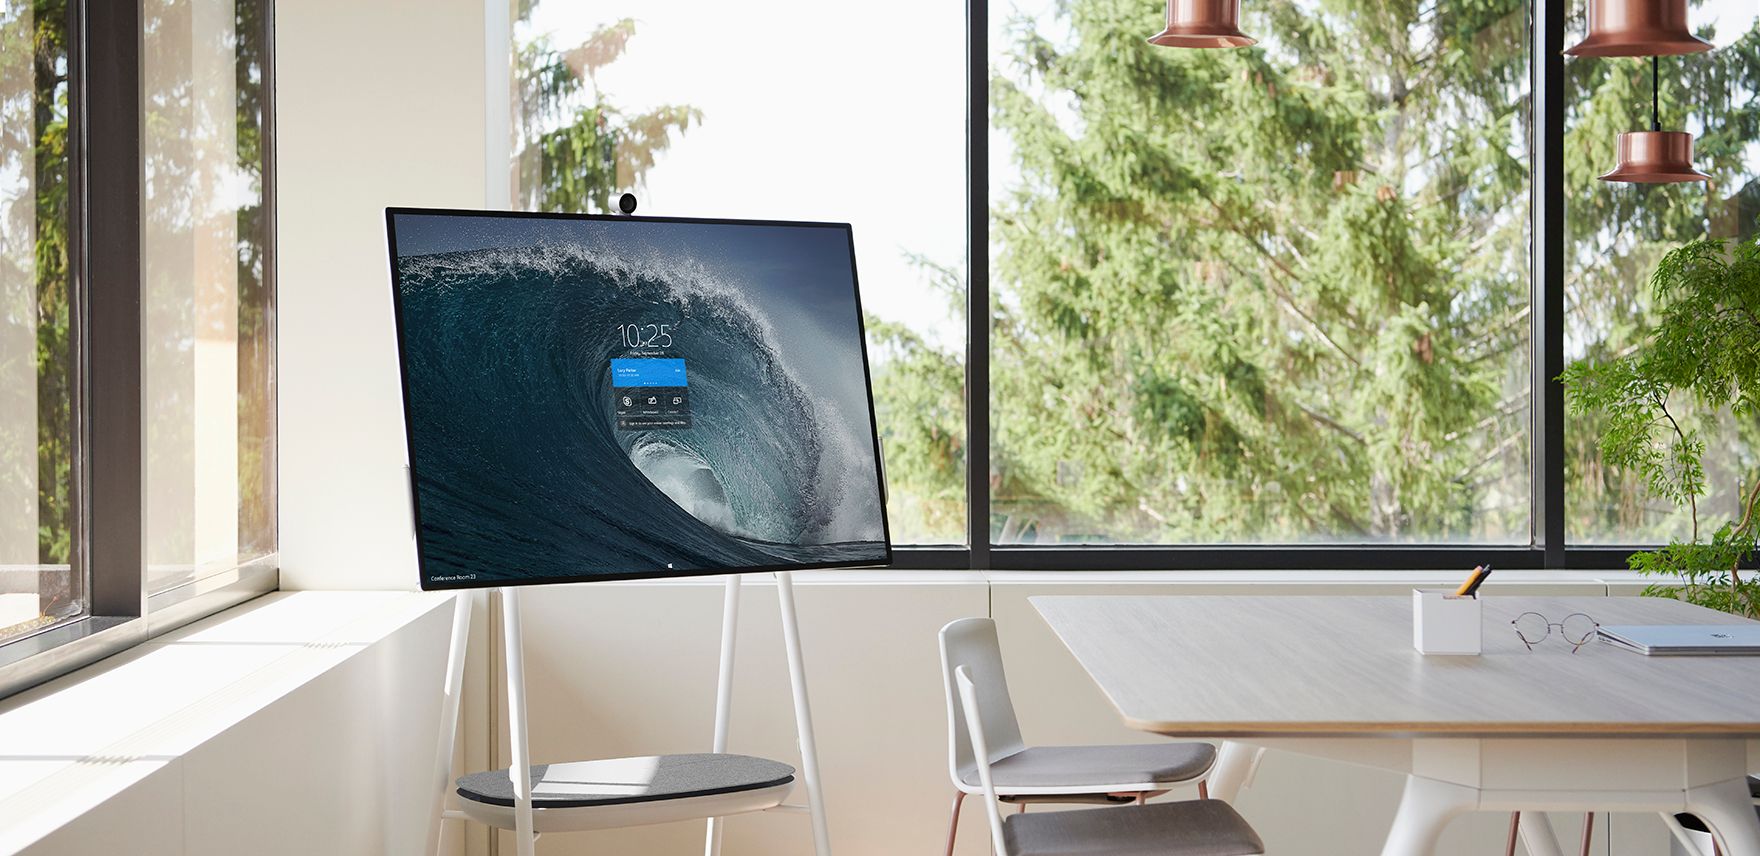 Microsoft เปิดตัว Surface Hub 2S คอมจอยักษ์ 50 นิ้ว 4K รองรับมัลติทัช มีล้อเลื่อน เคาะราคาไทย 308,160 บาท